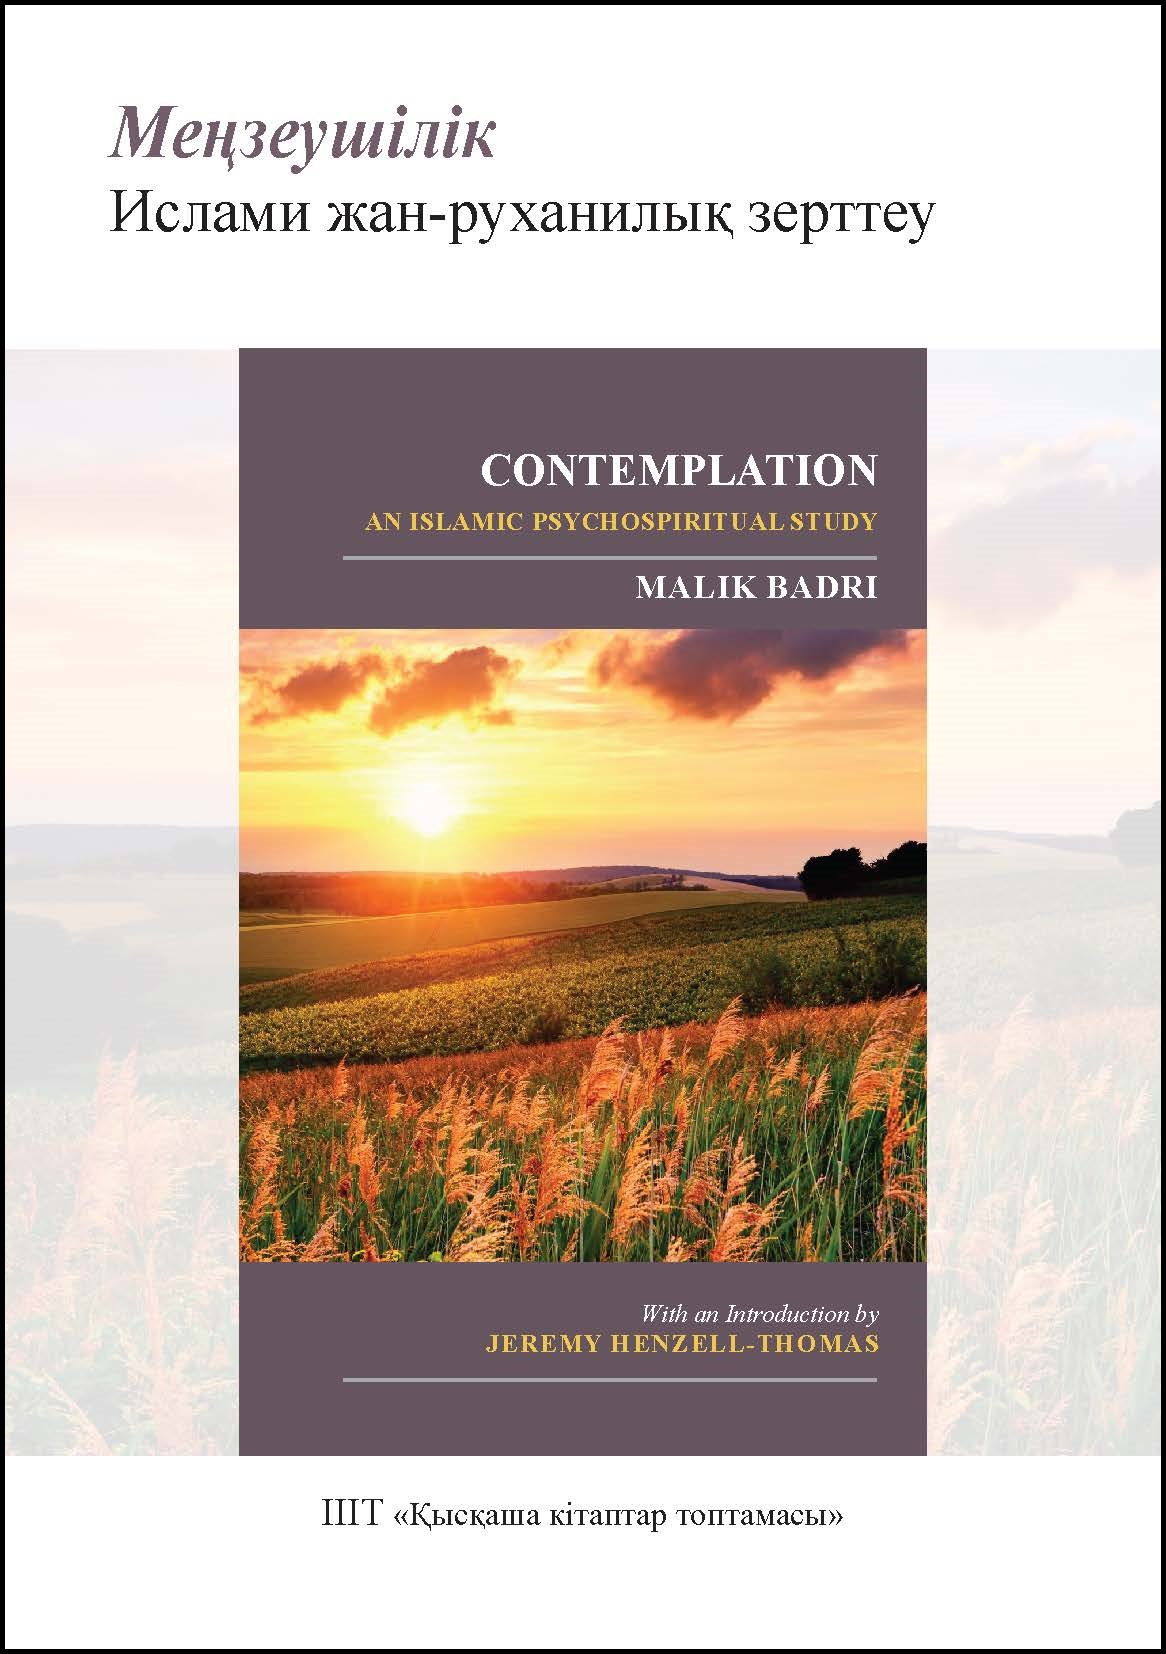 Kazakh: Меңзеушілік: ислами жан-руханилық зерттеу (Books-in-Brief: Contemplation: An Islamic Psychospiritual Study)